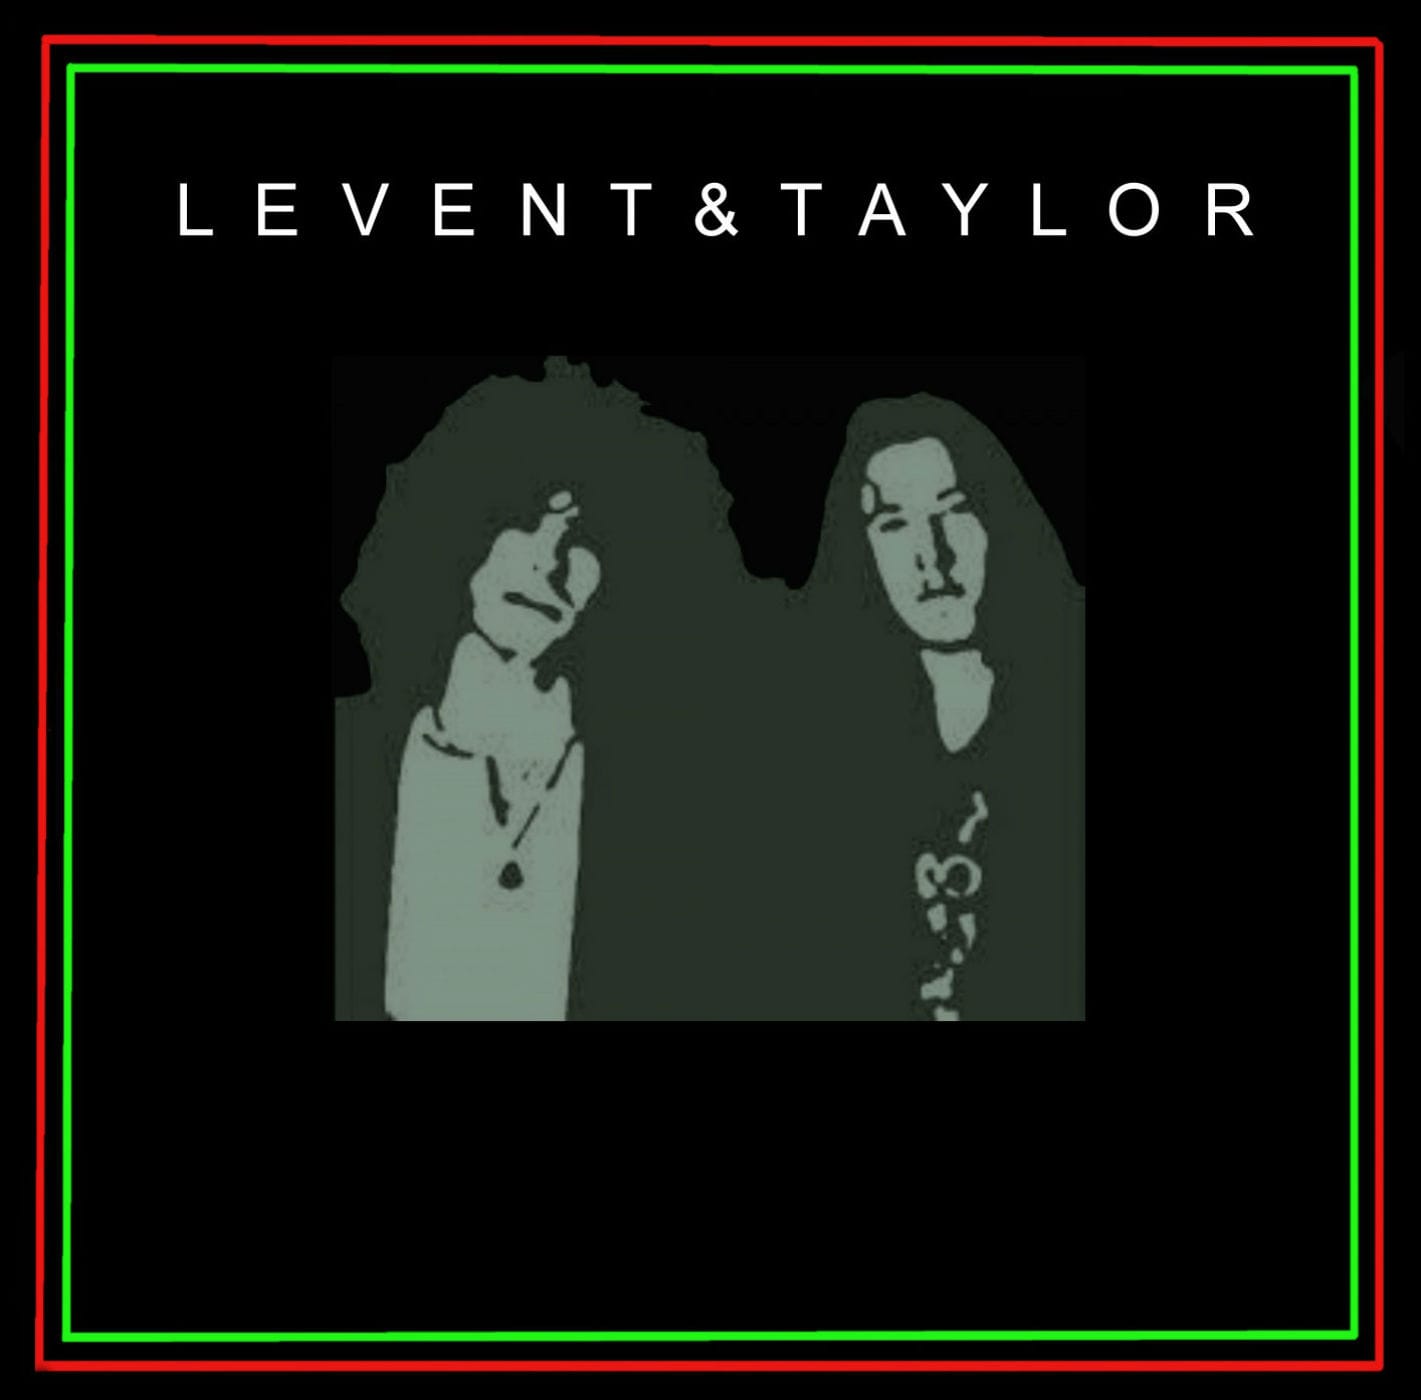 levent & taylors new album